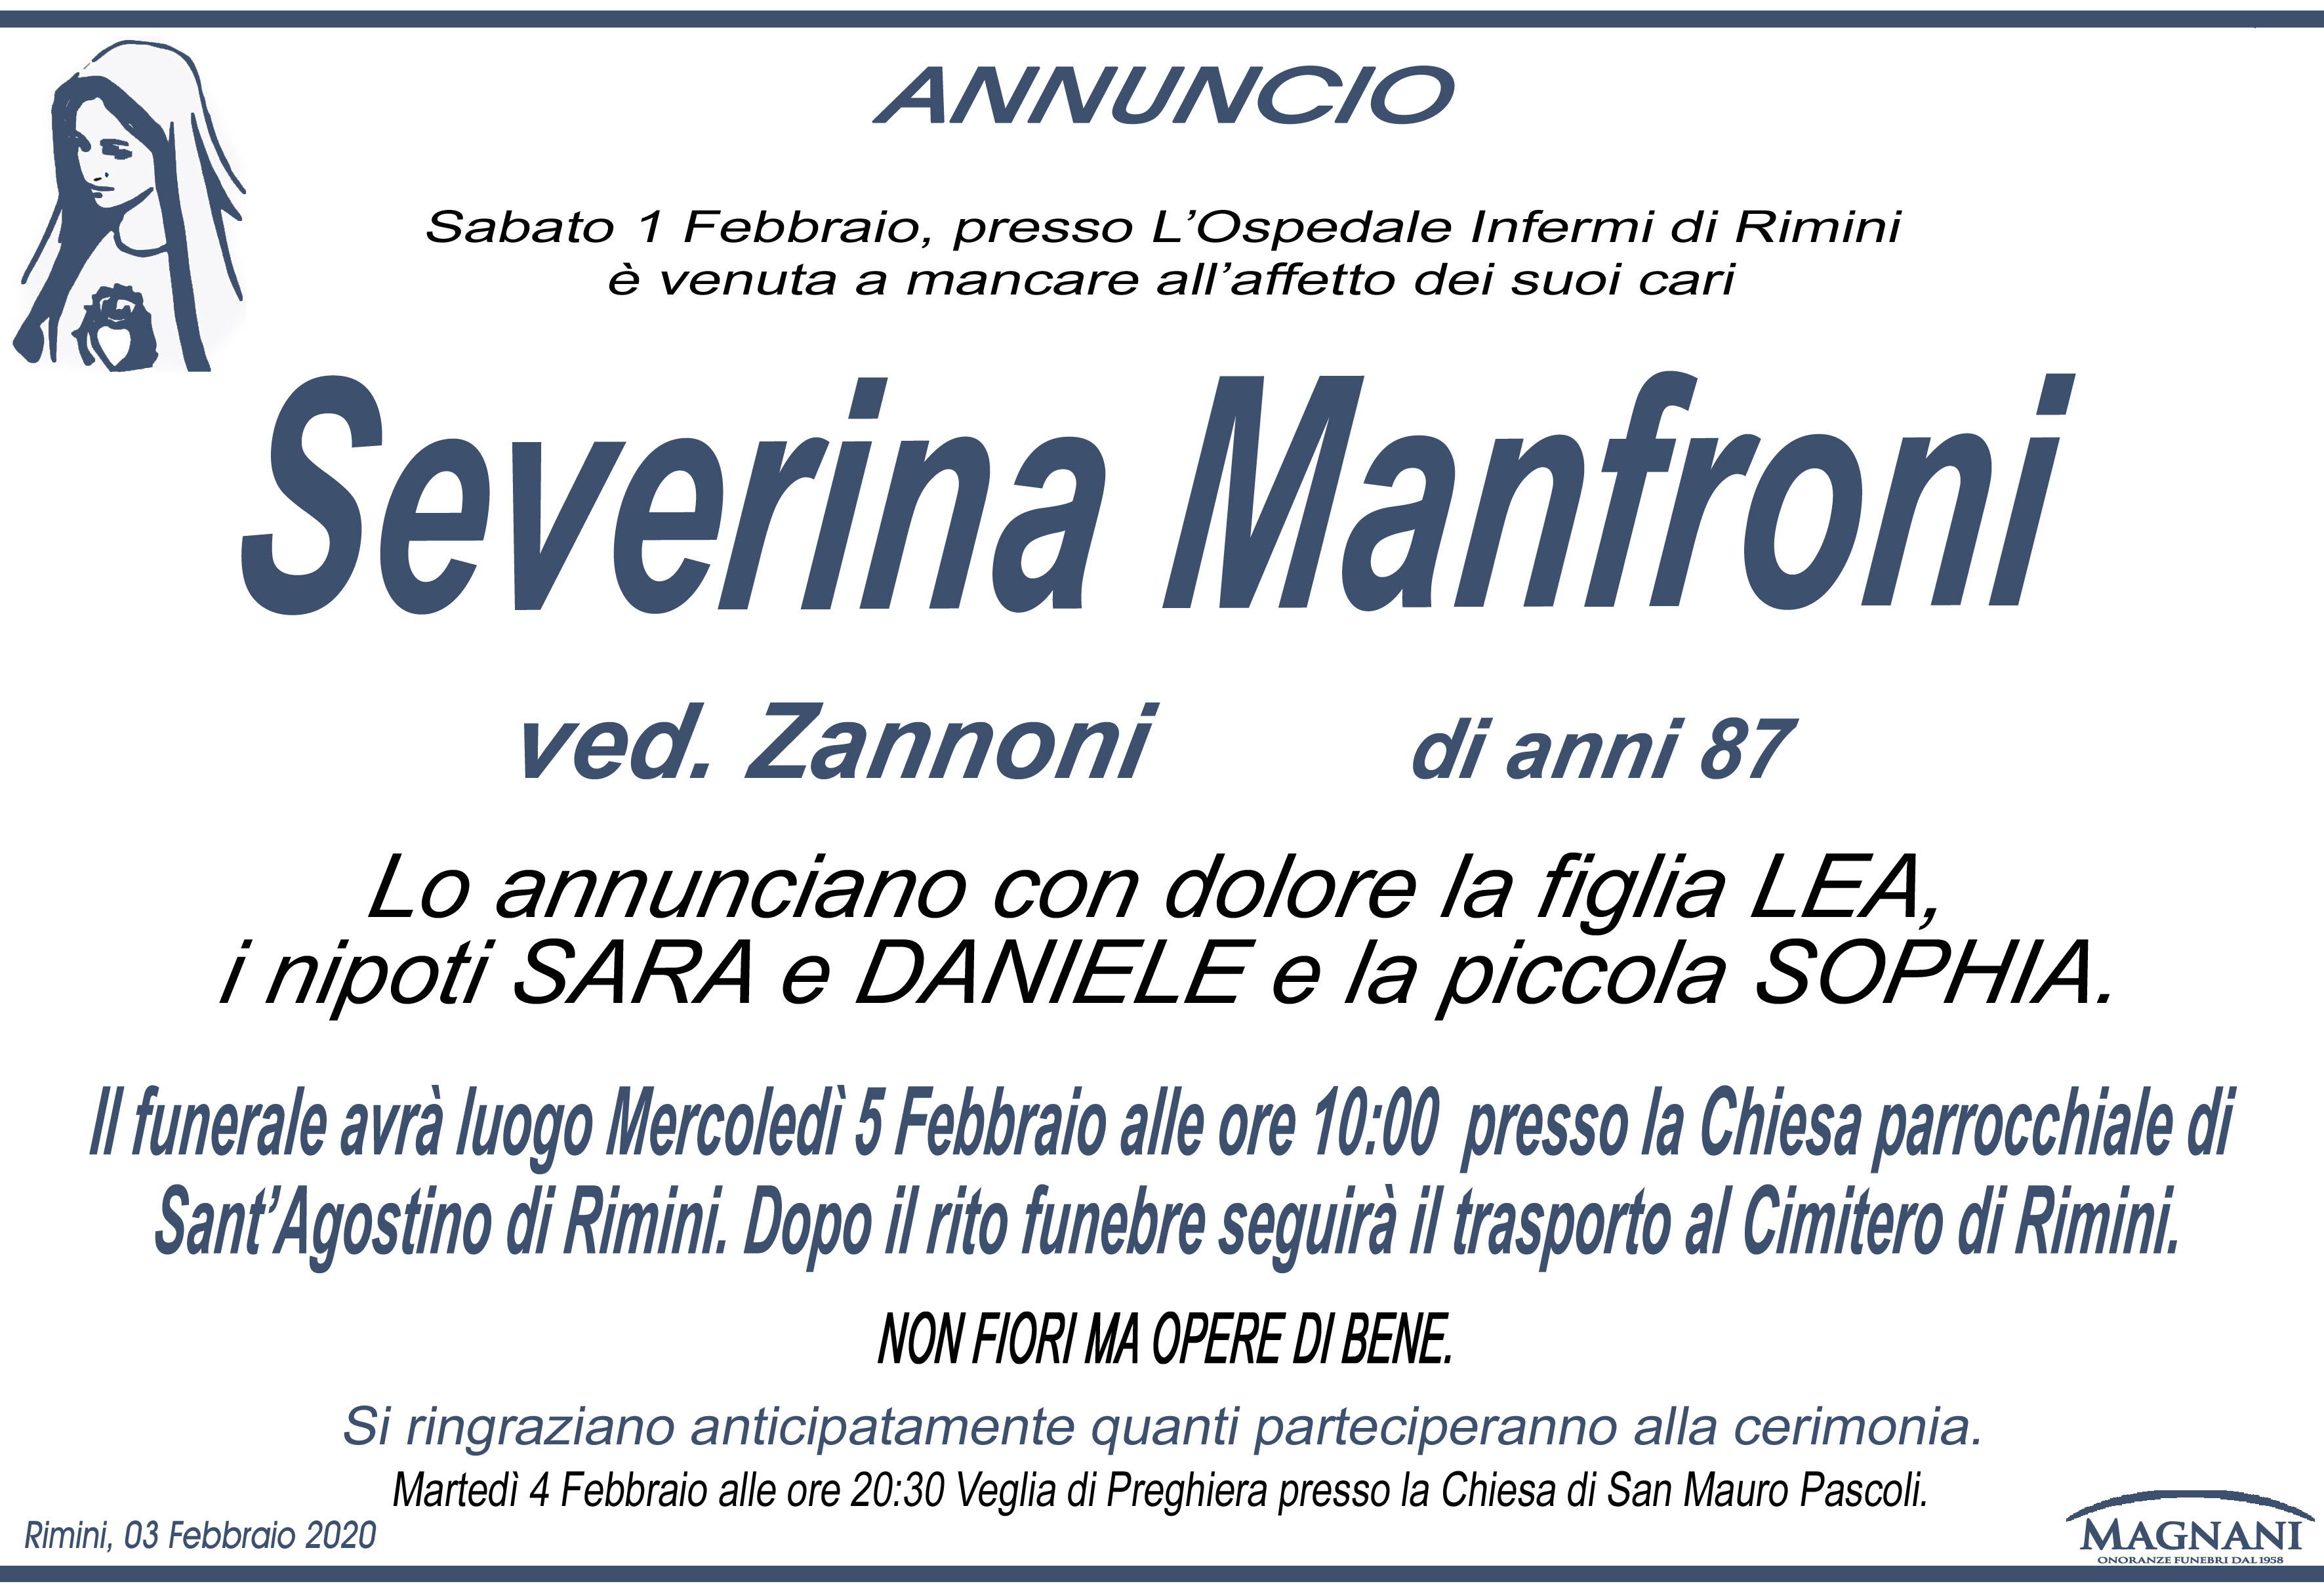 Severina Manfroni